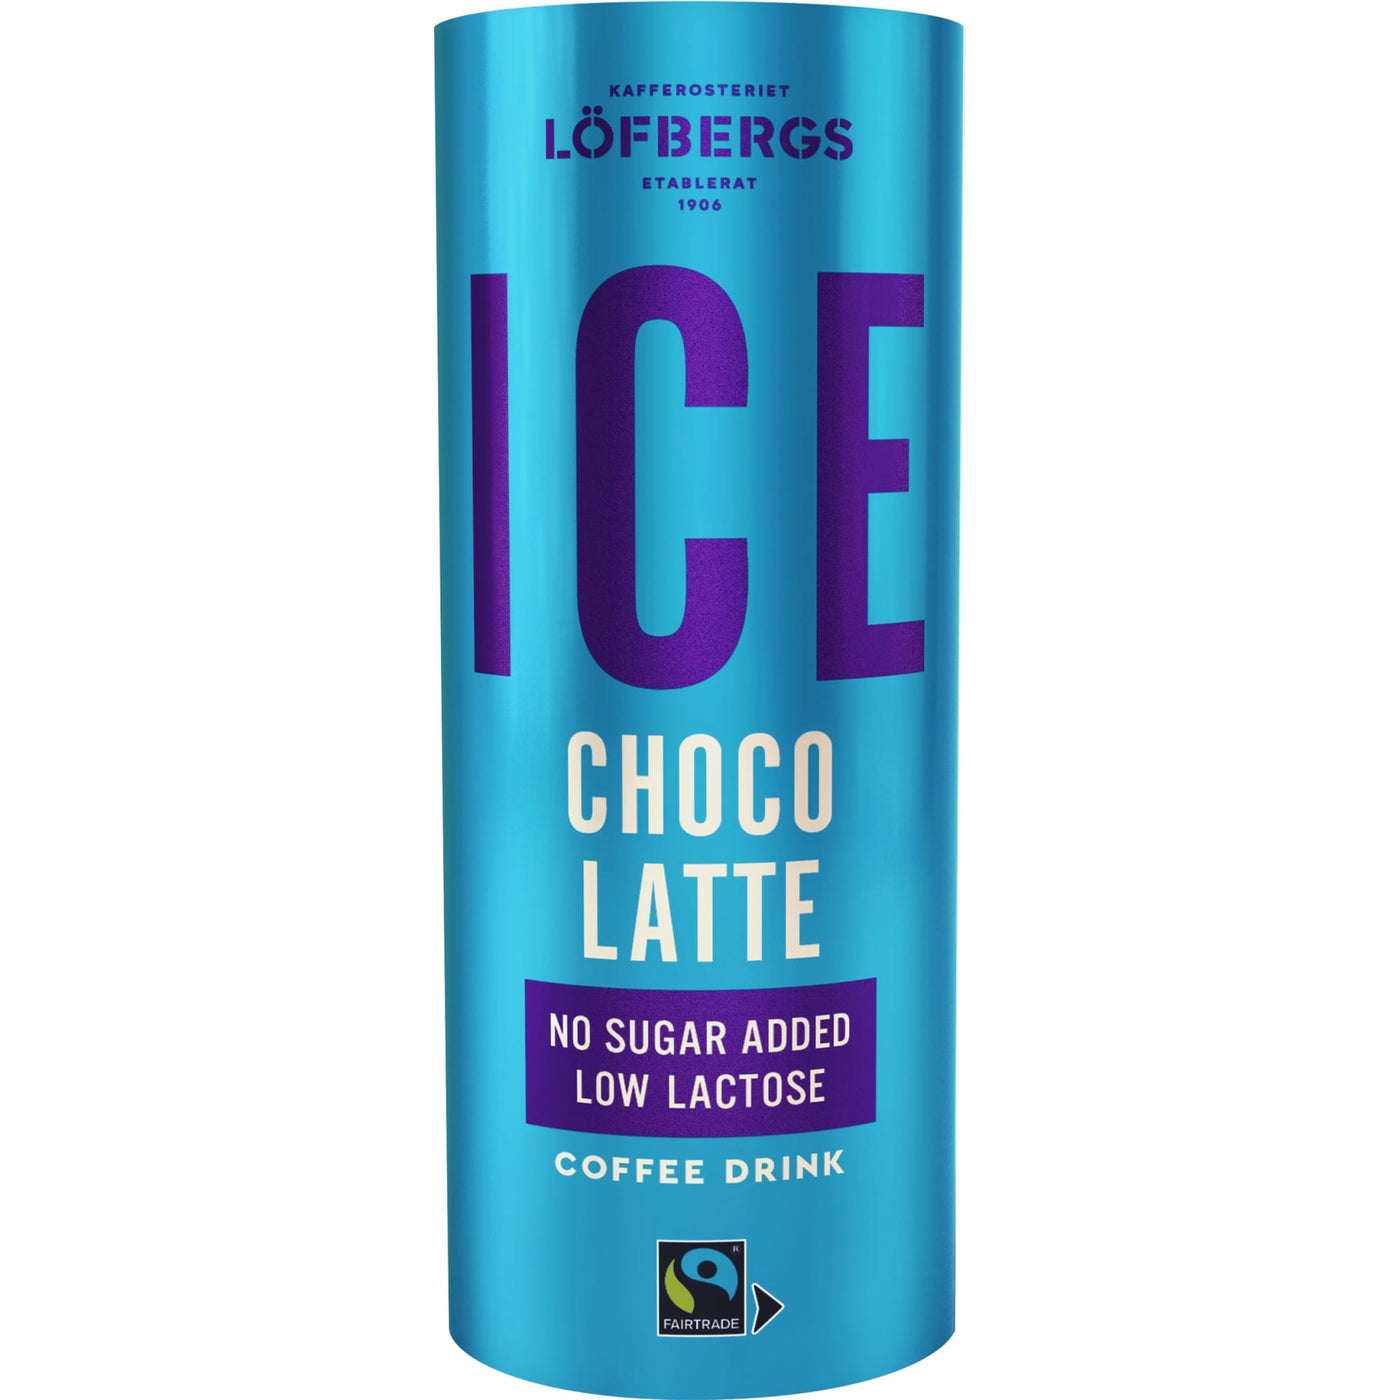 ICE Choco Latte - Coffee